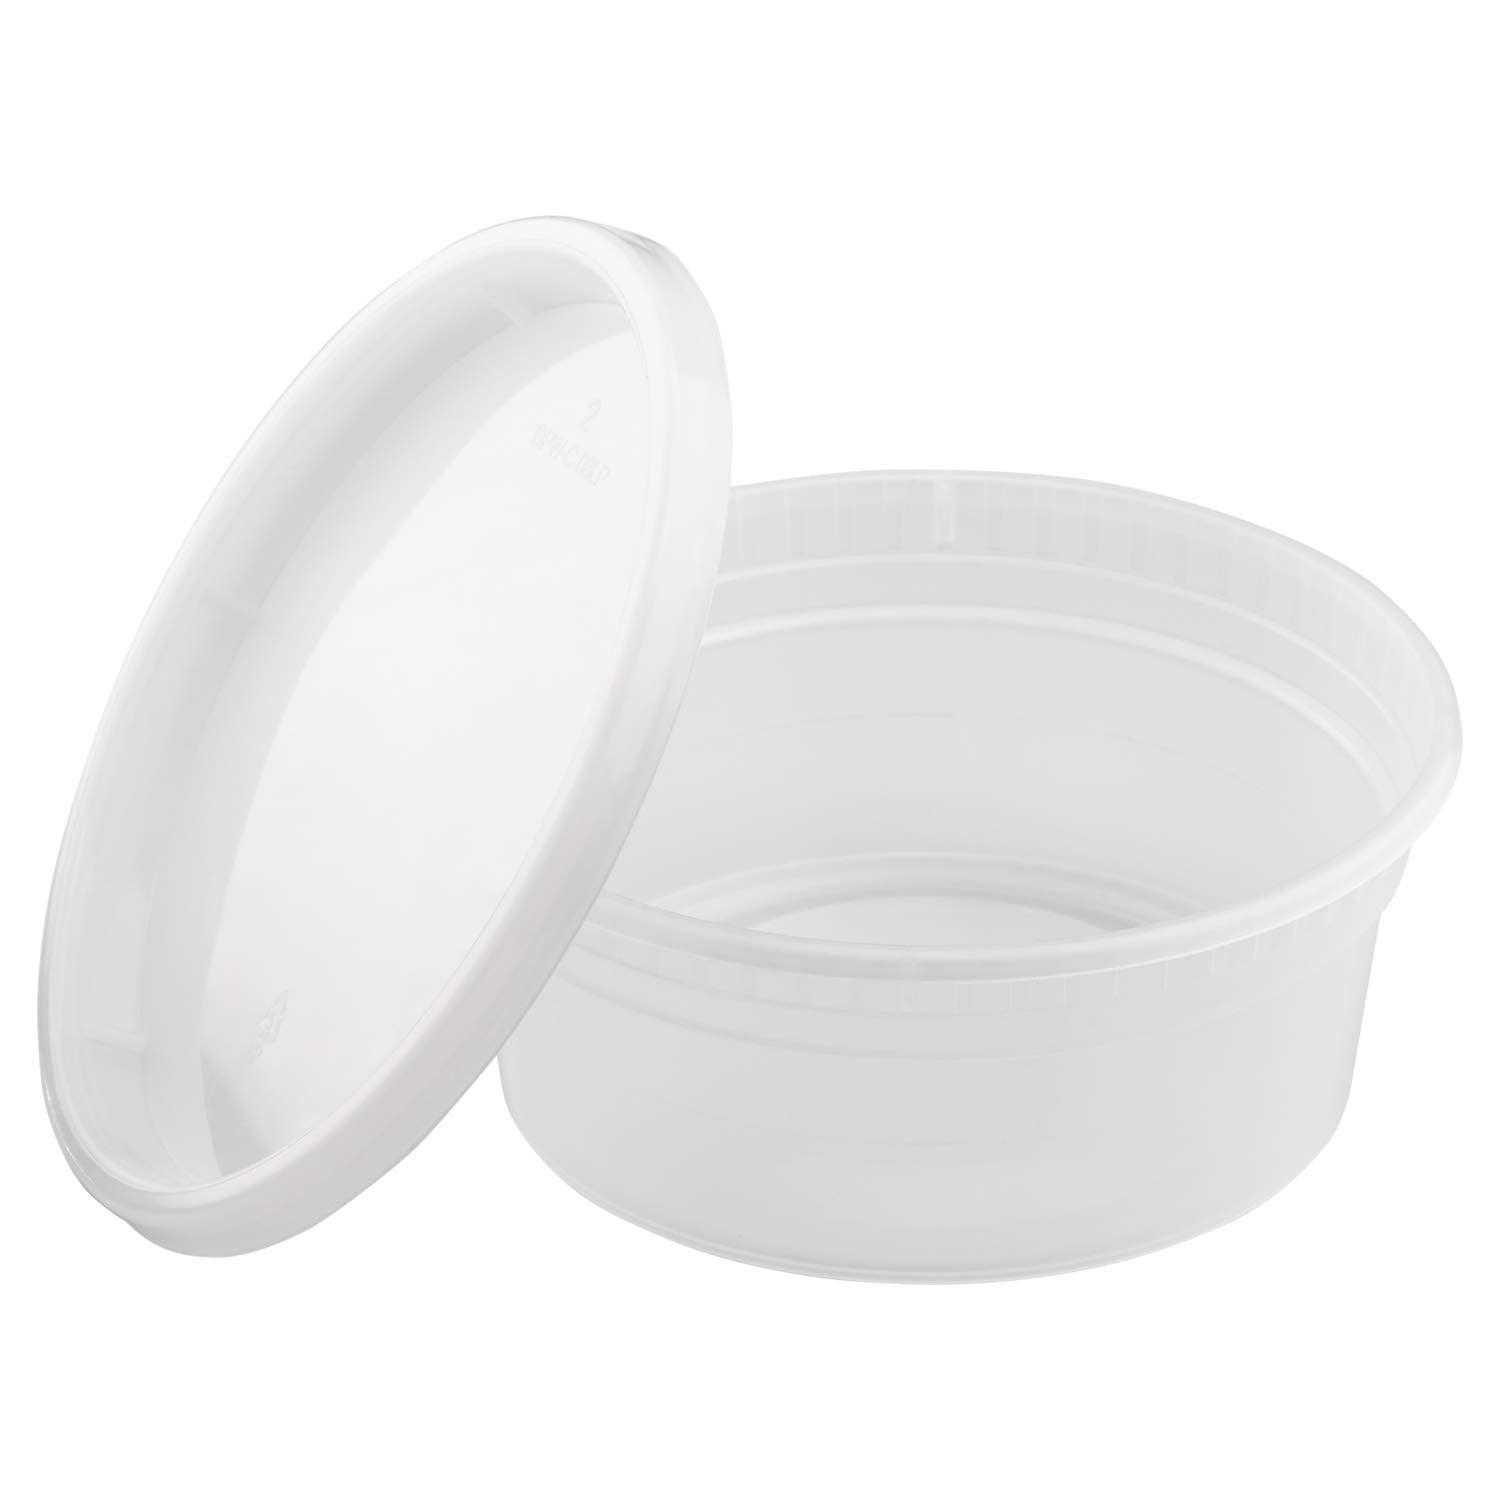 Karat 32 oz PP Plastic Microwavable Round Food Containers & Lids, Black - 150 Sets